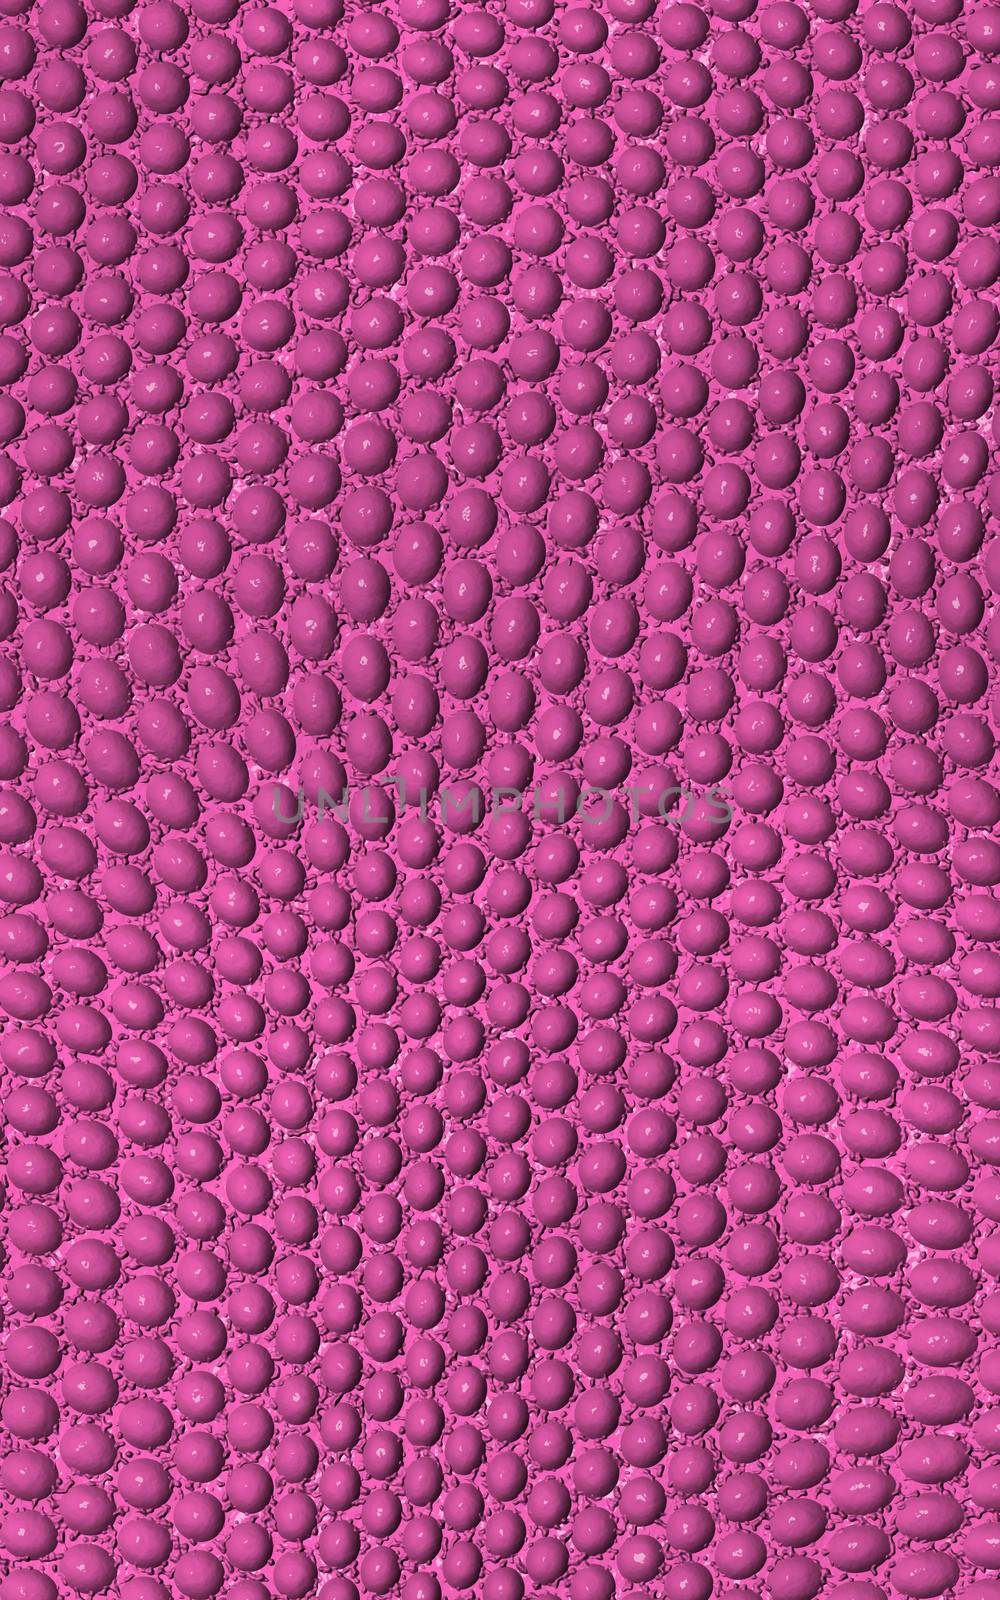 Pink python snake skin texture background